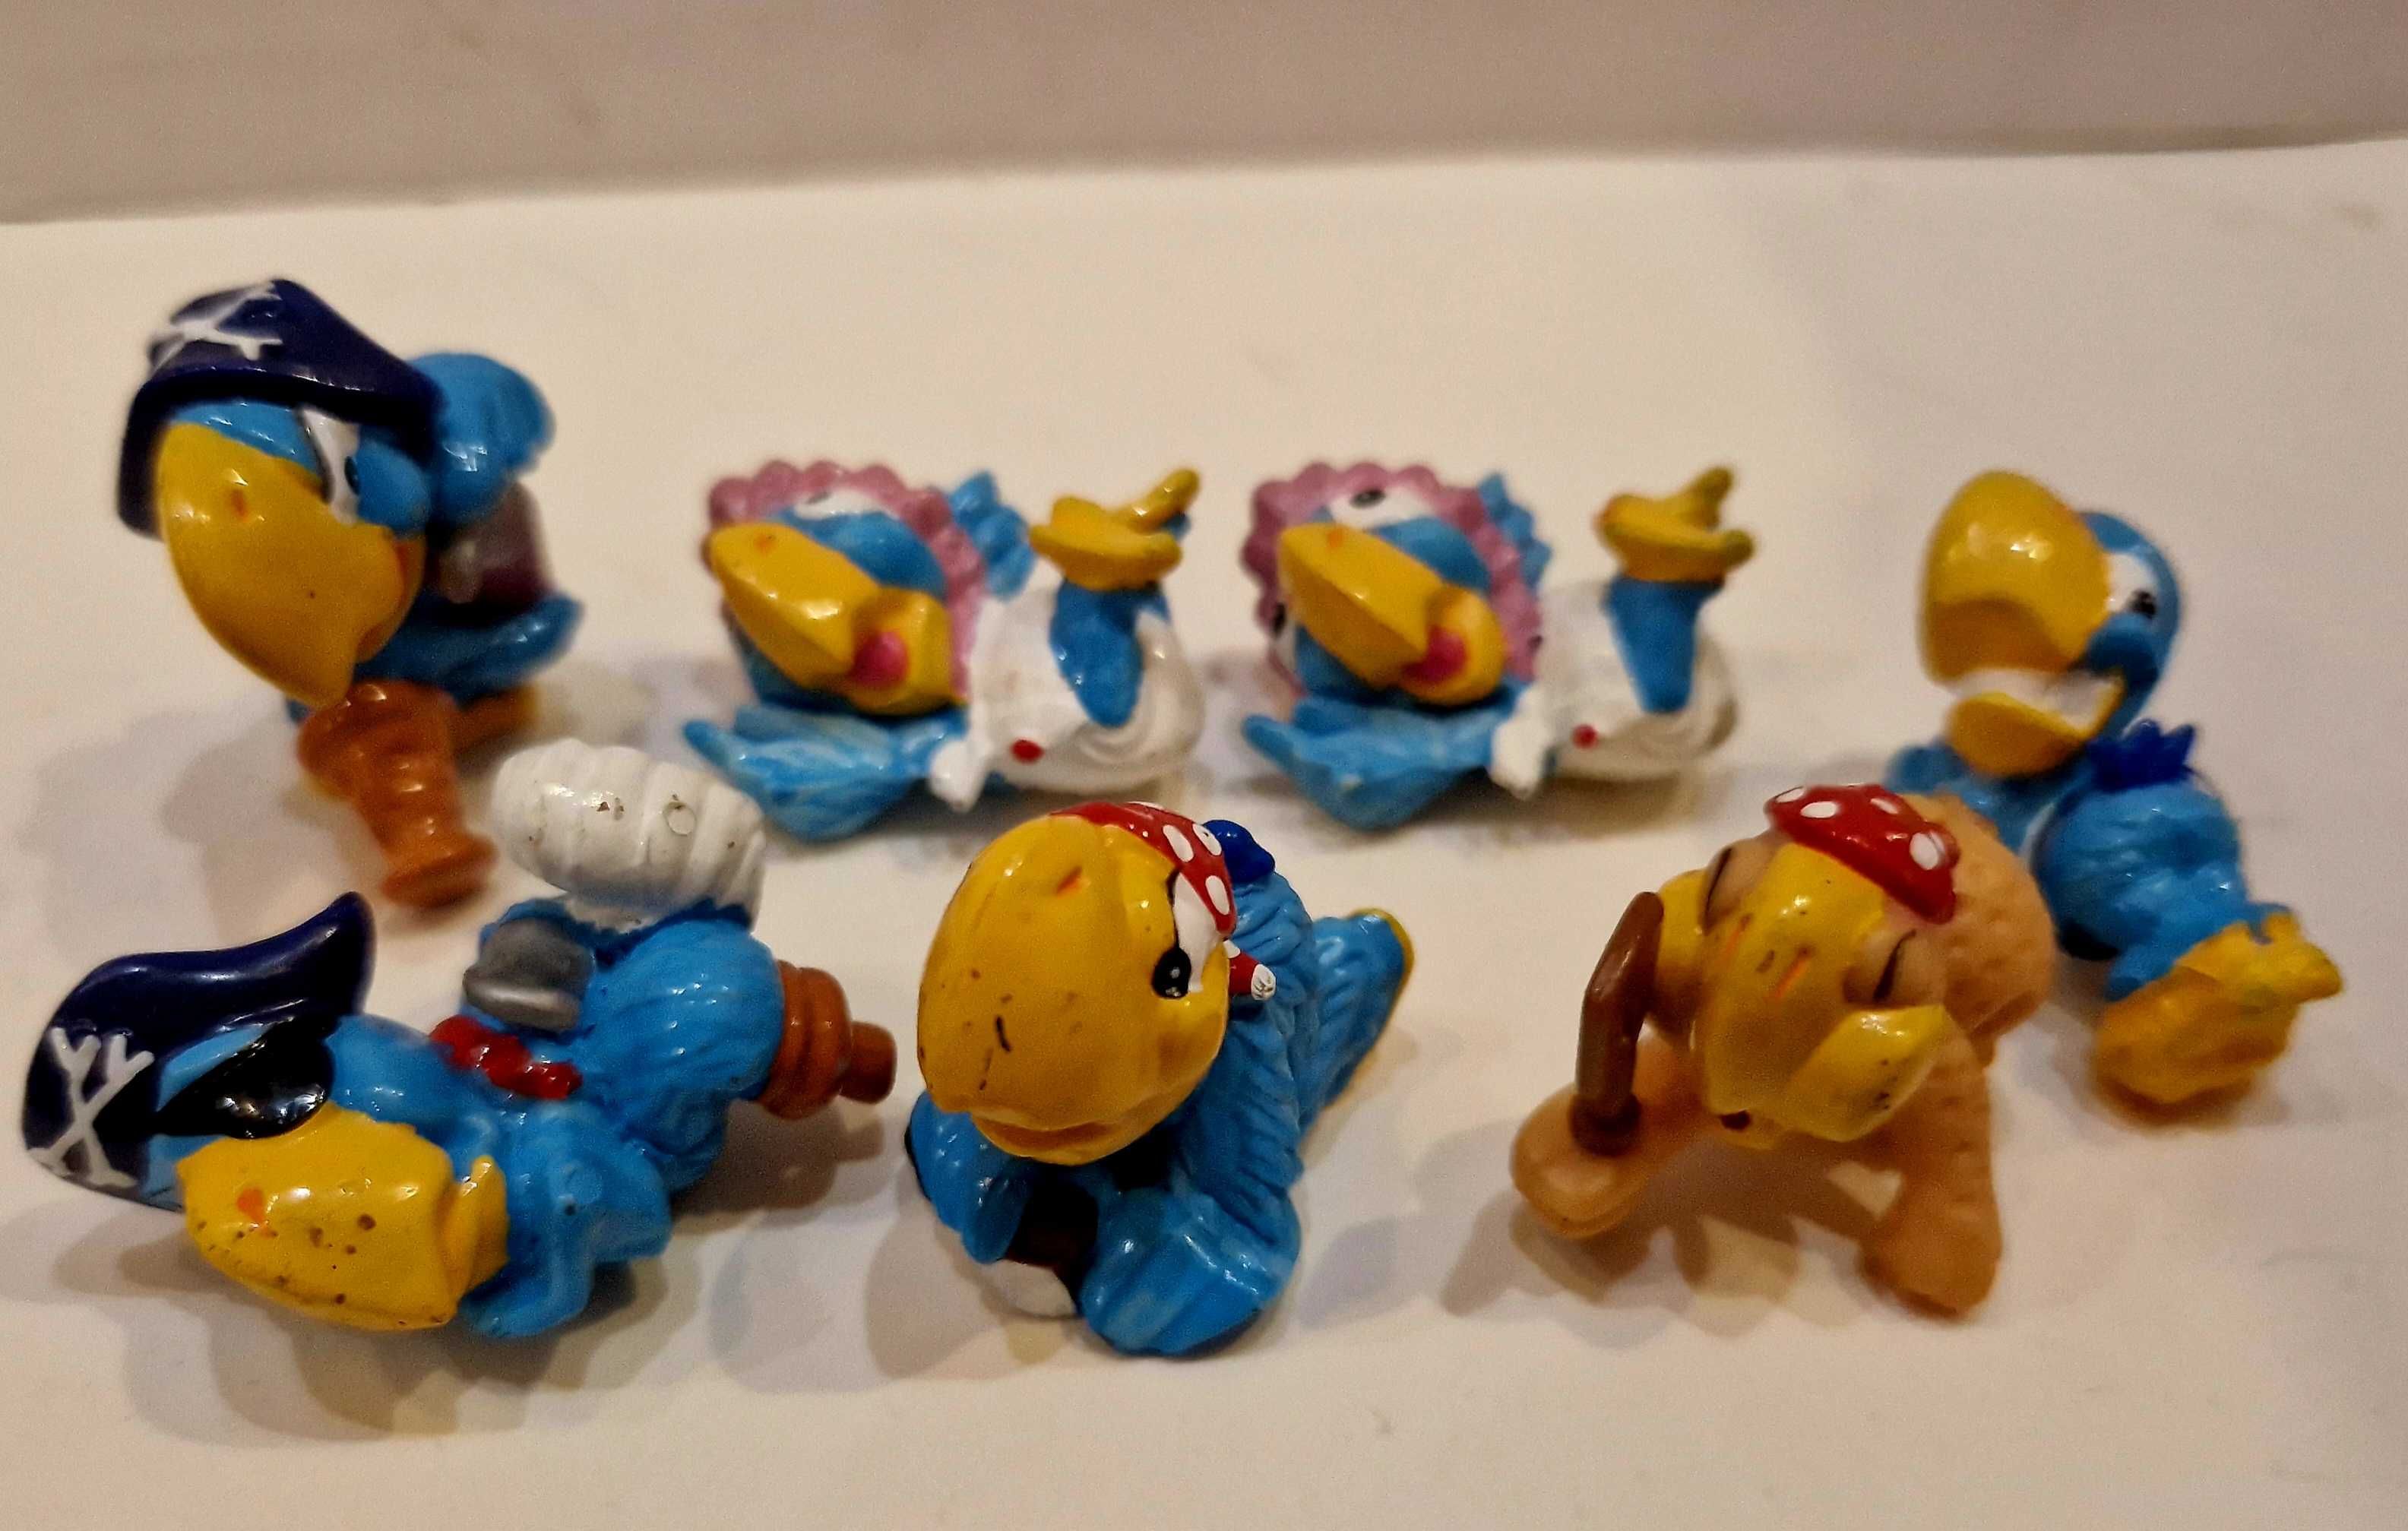 Фигурки игрушки Киндер сюрприз гномы слоники бегемоты акулы попугаи